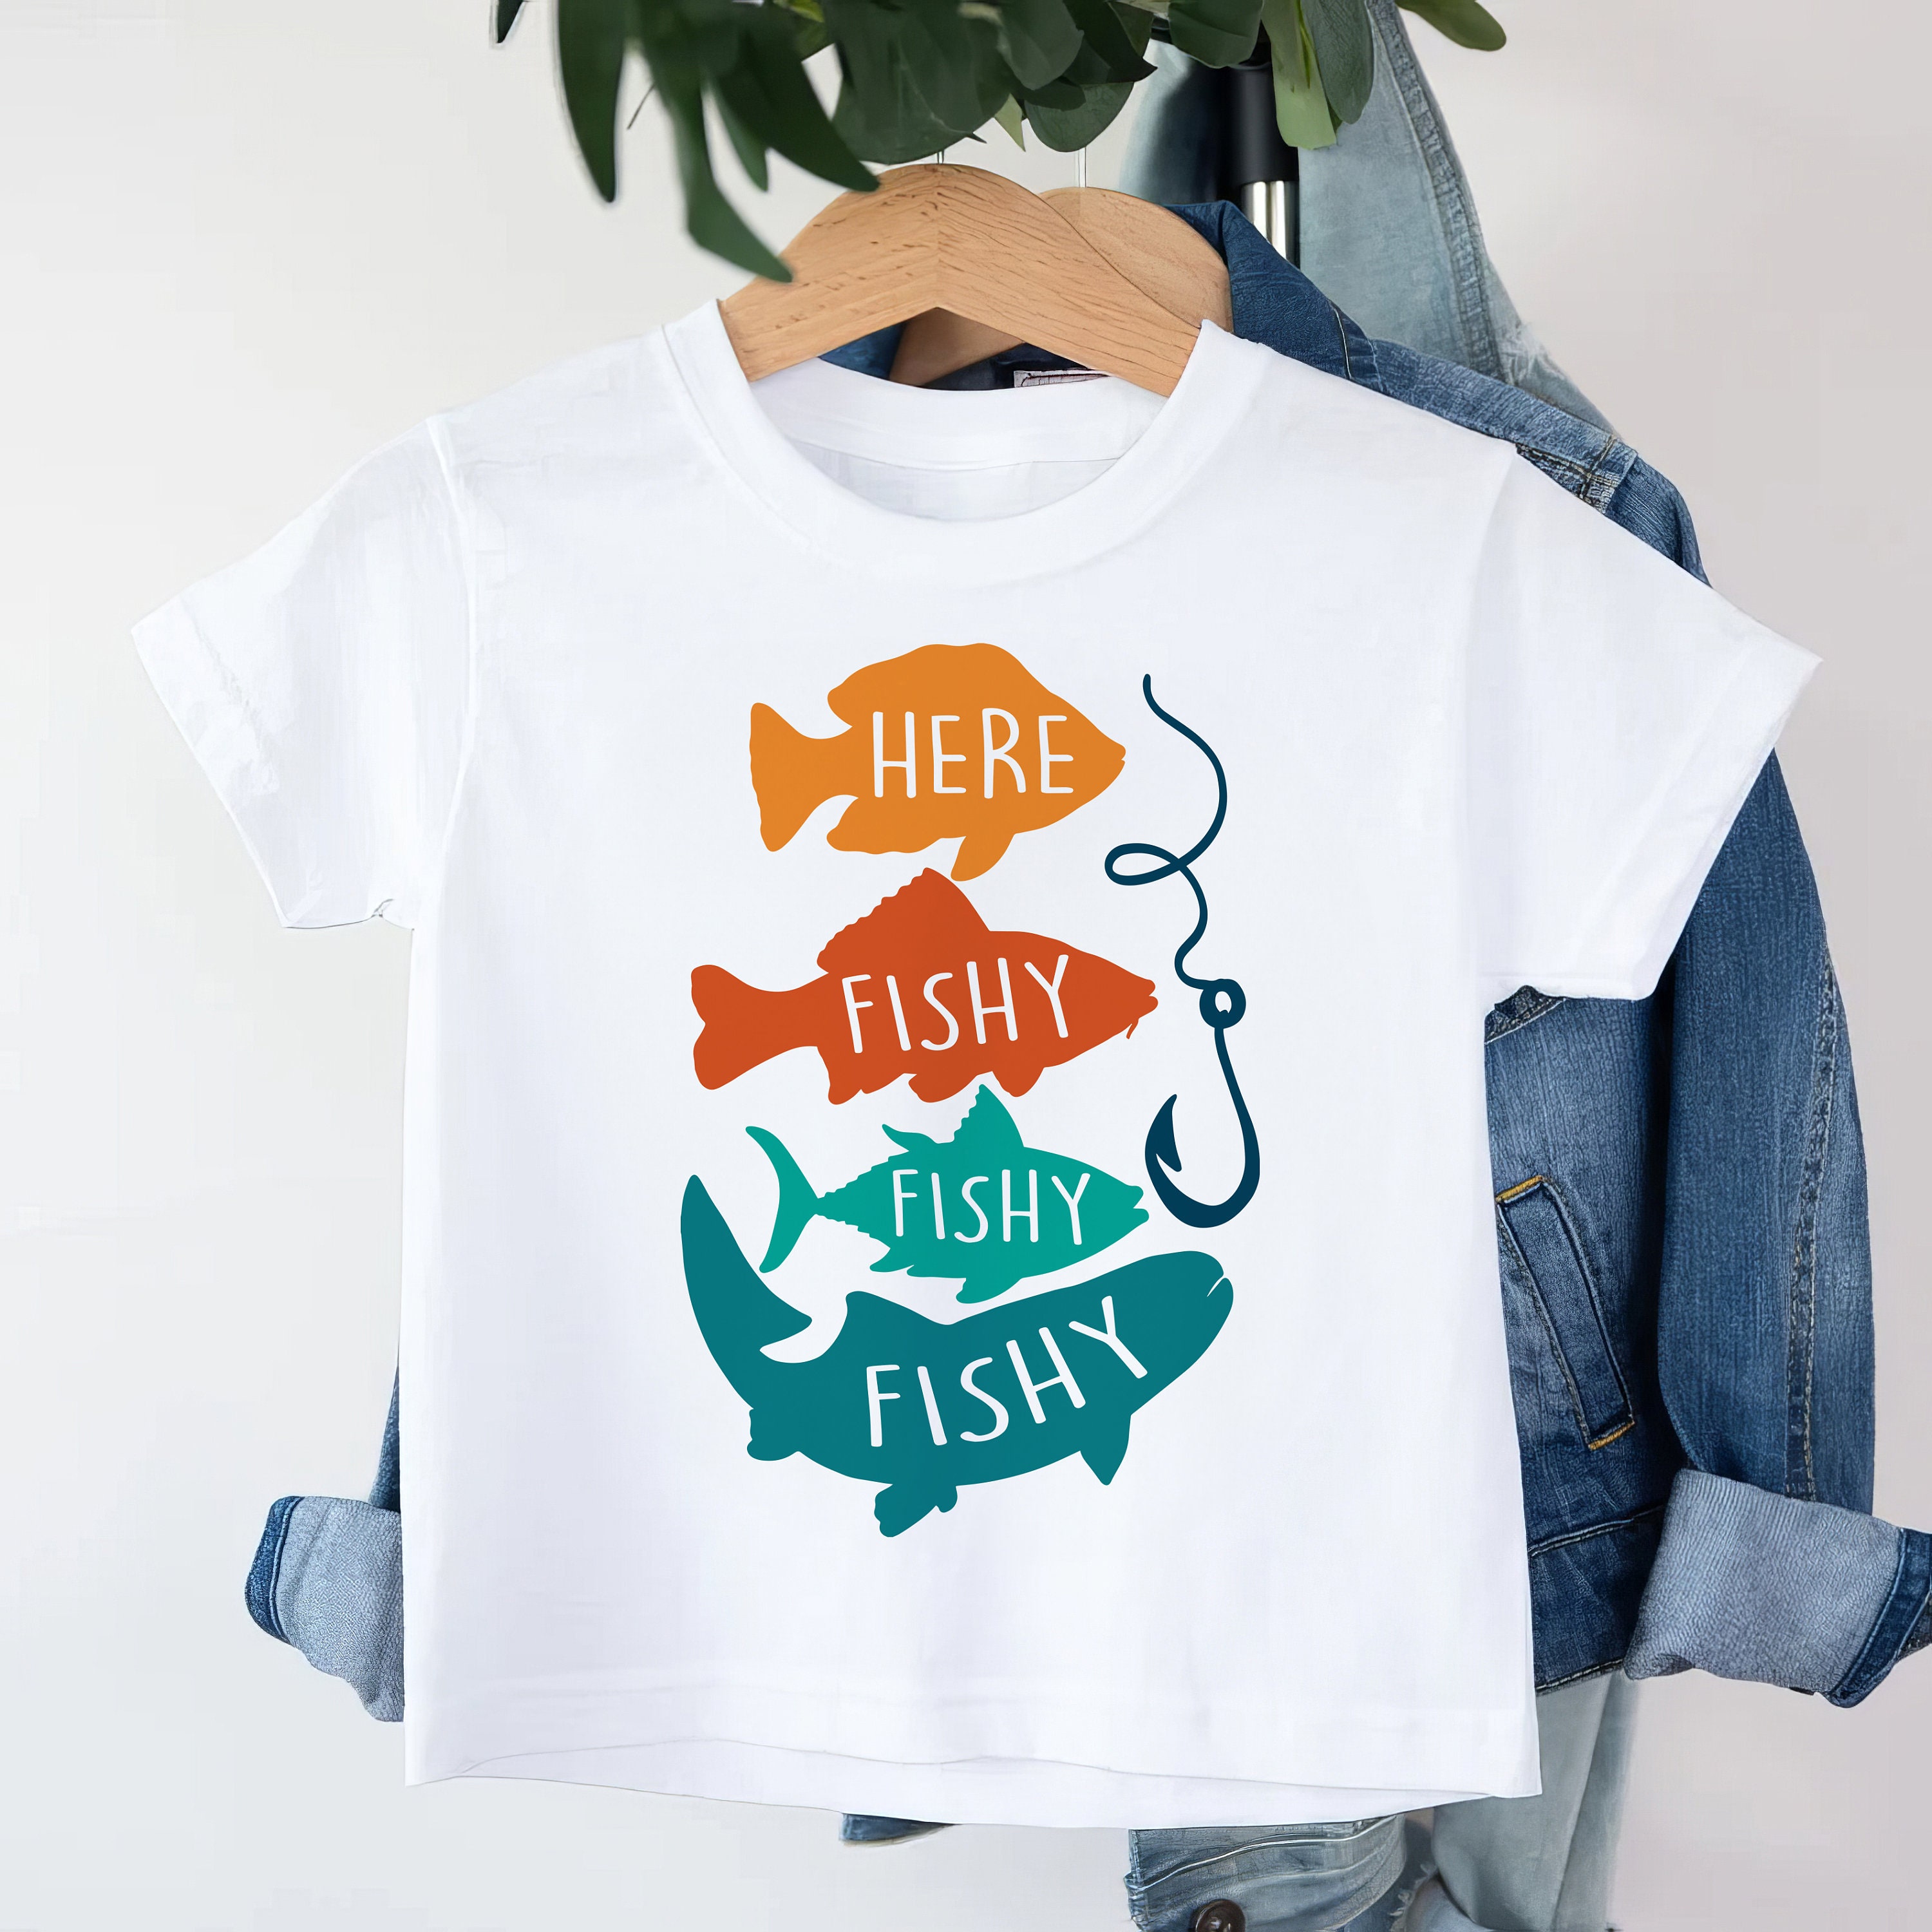 Inktastic Lucky Fishing Shirt- Fish Boys or Girls Toddler T-Shirt